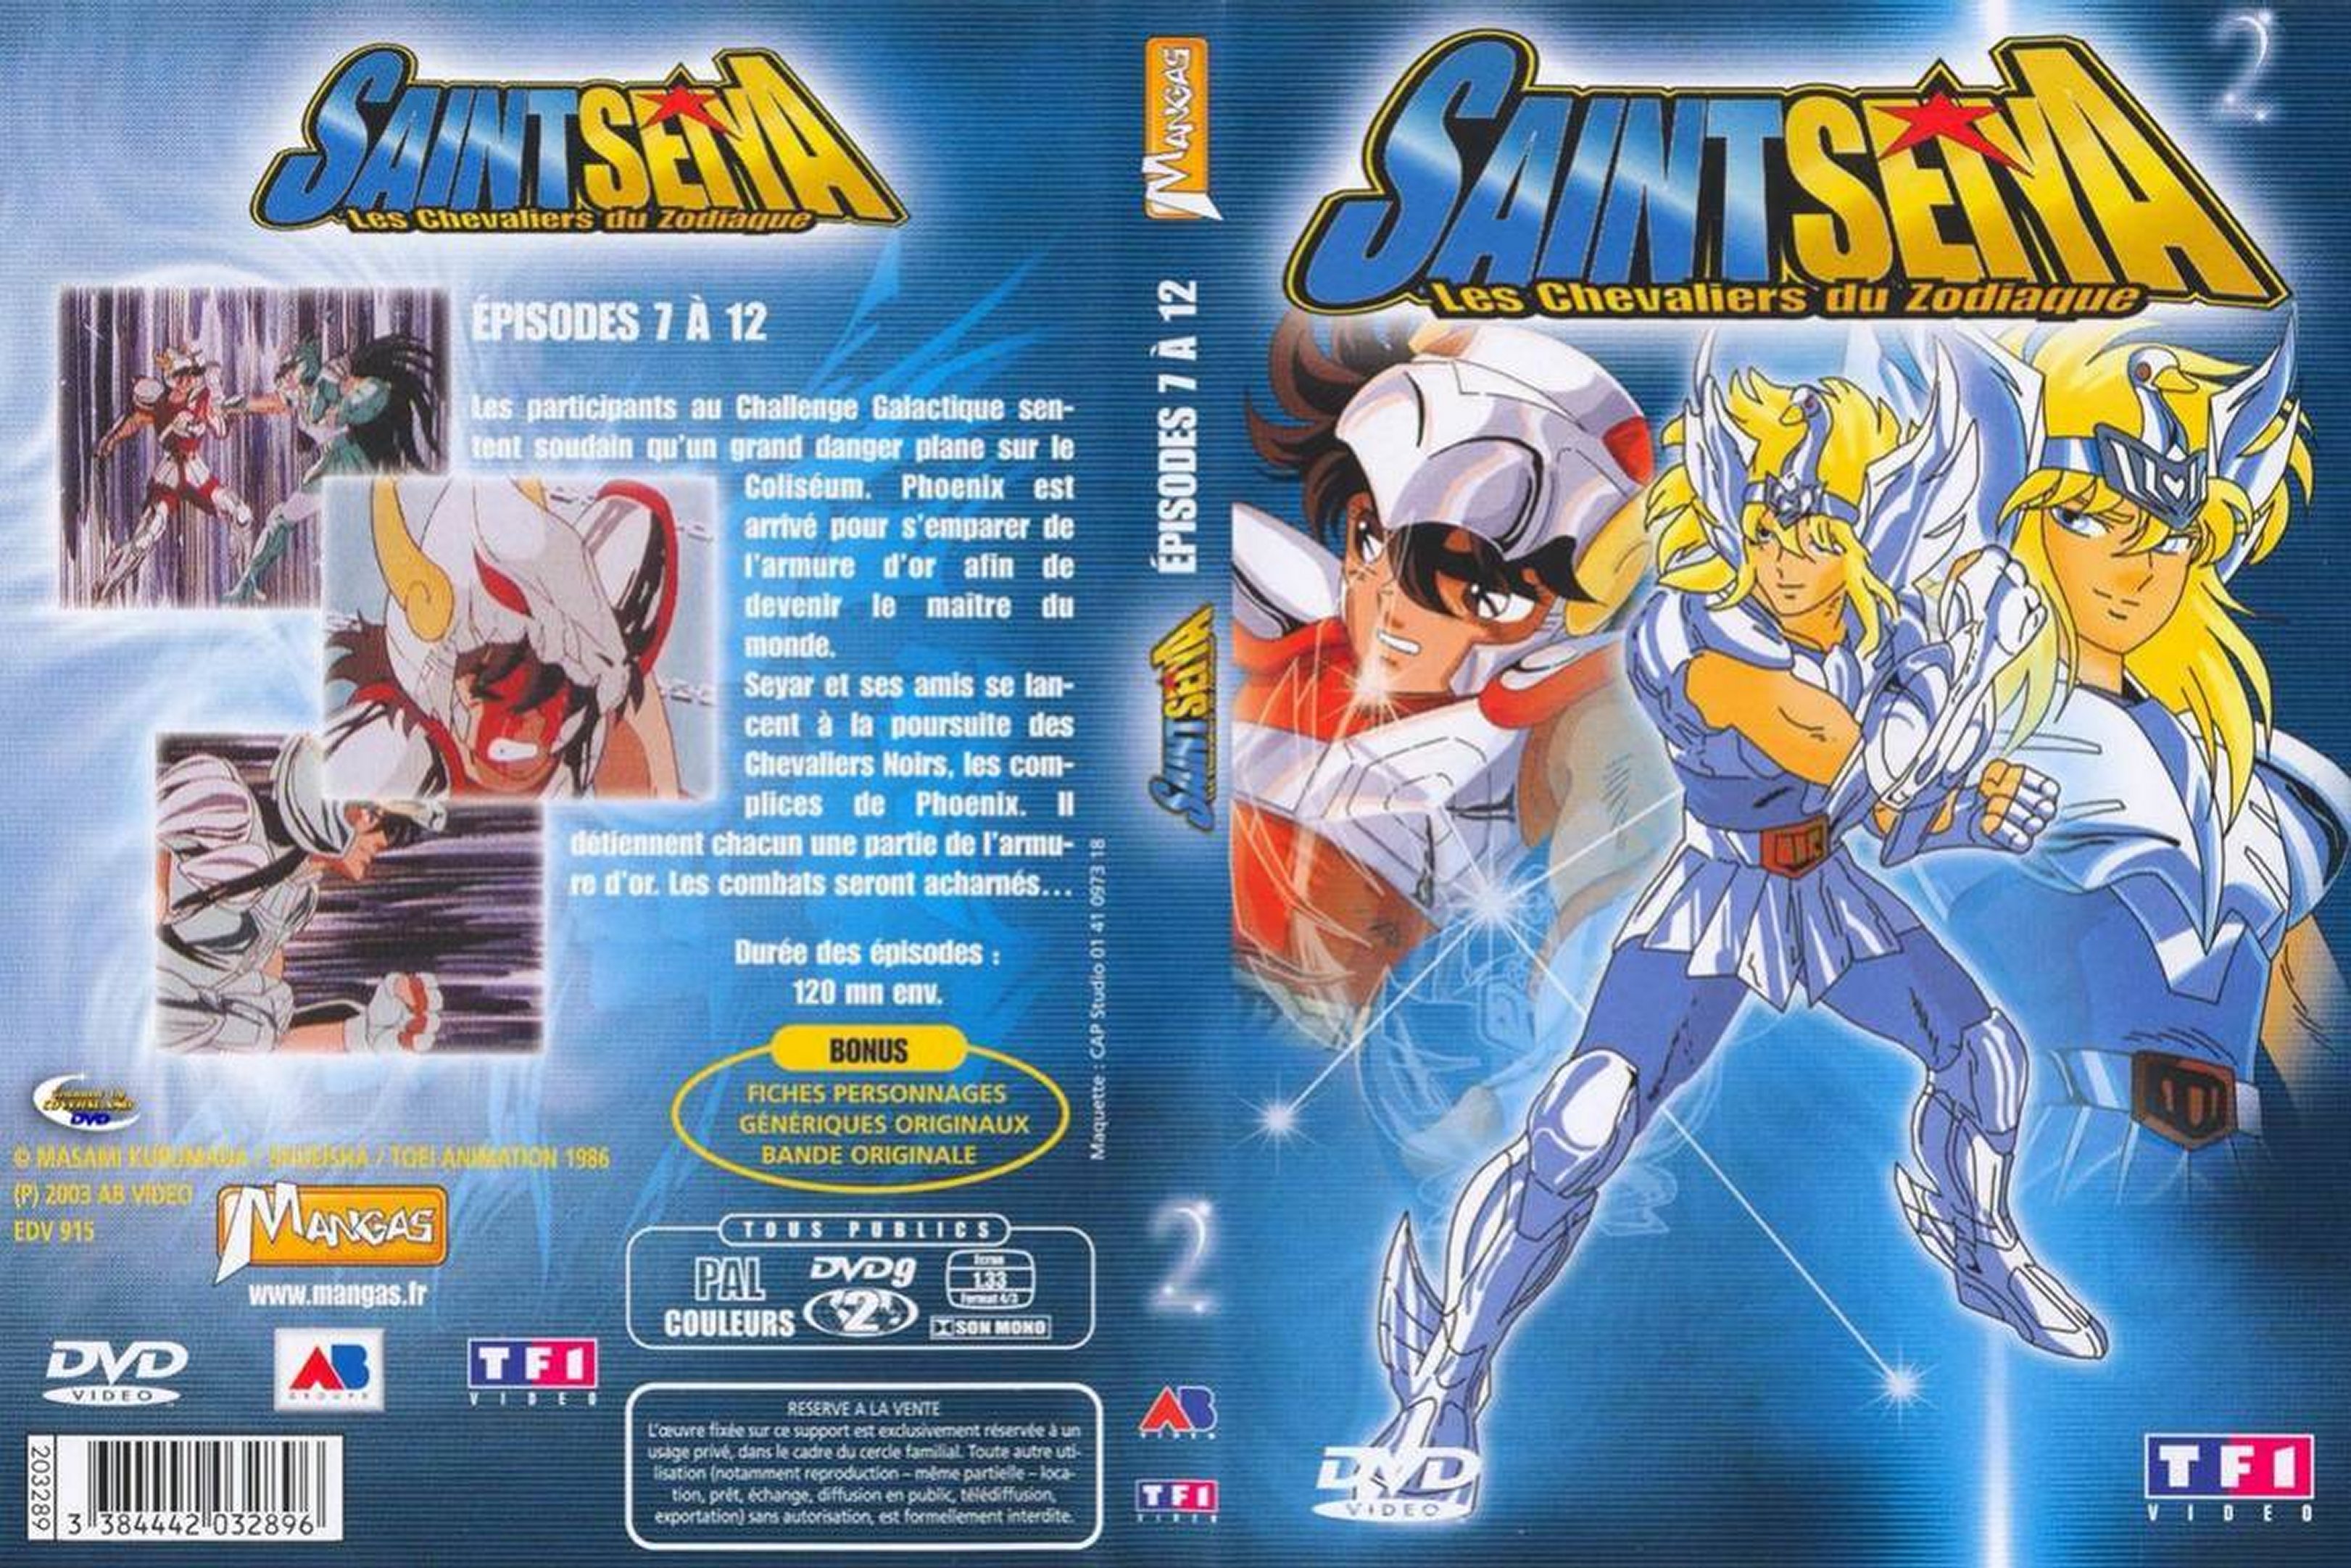 Jaquette DVD Saint Seiya vol 02